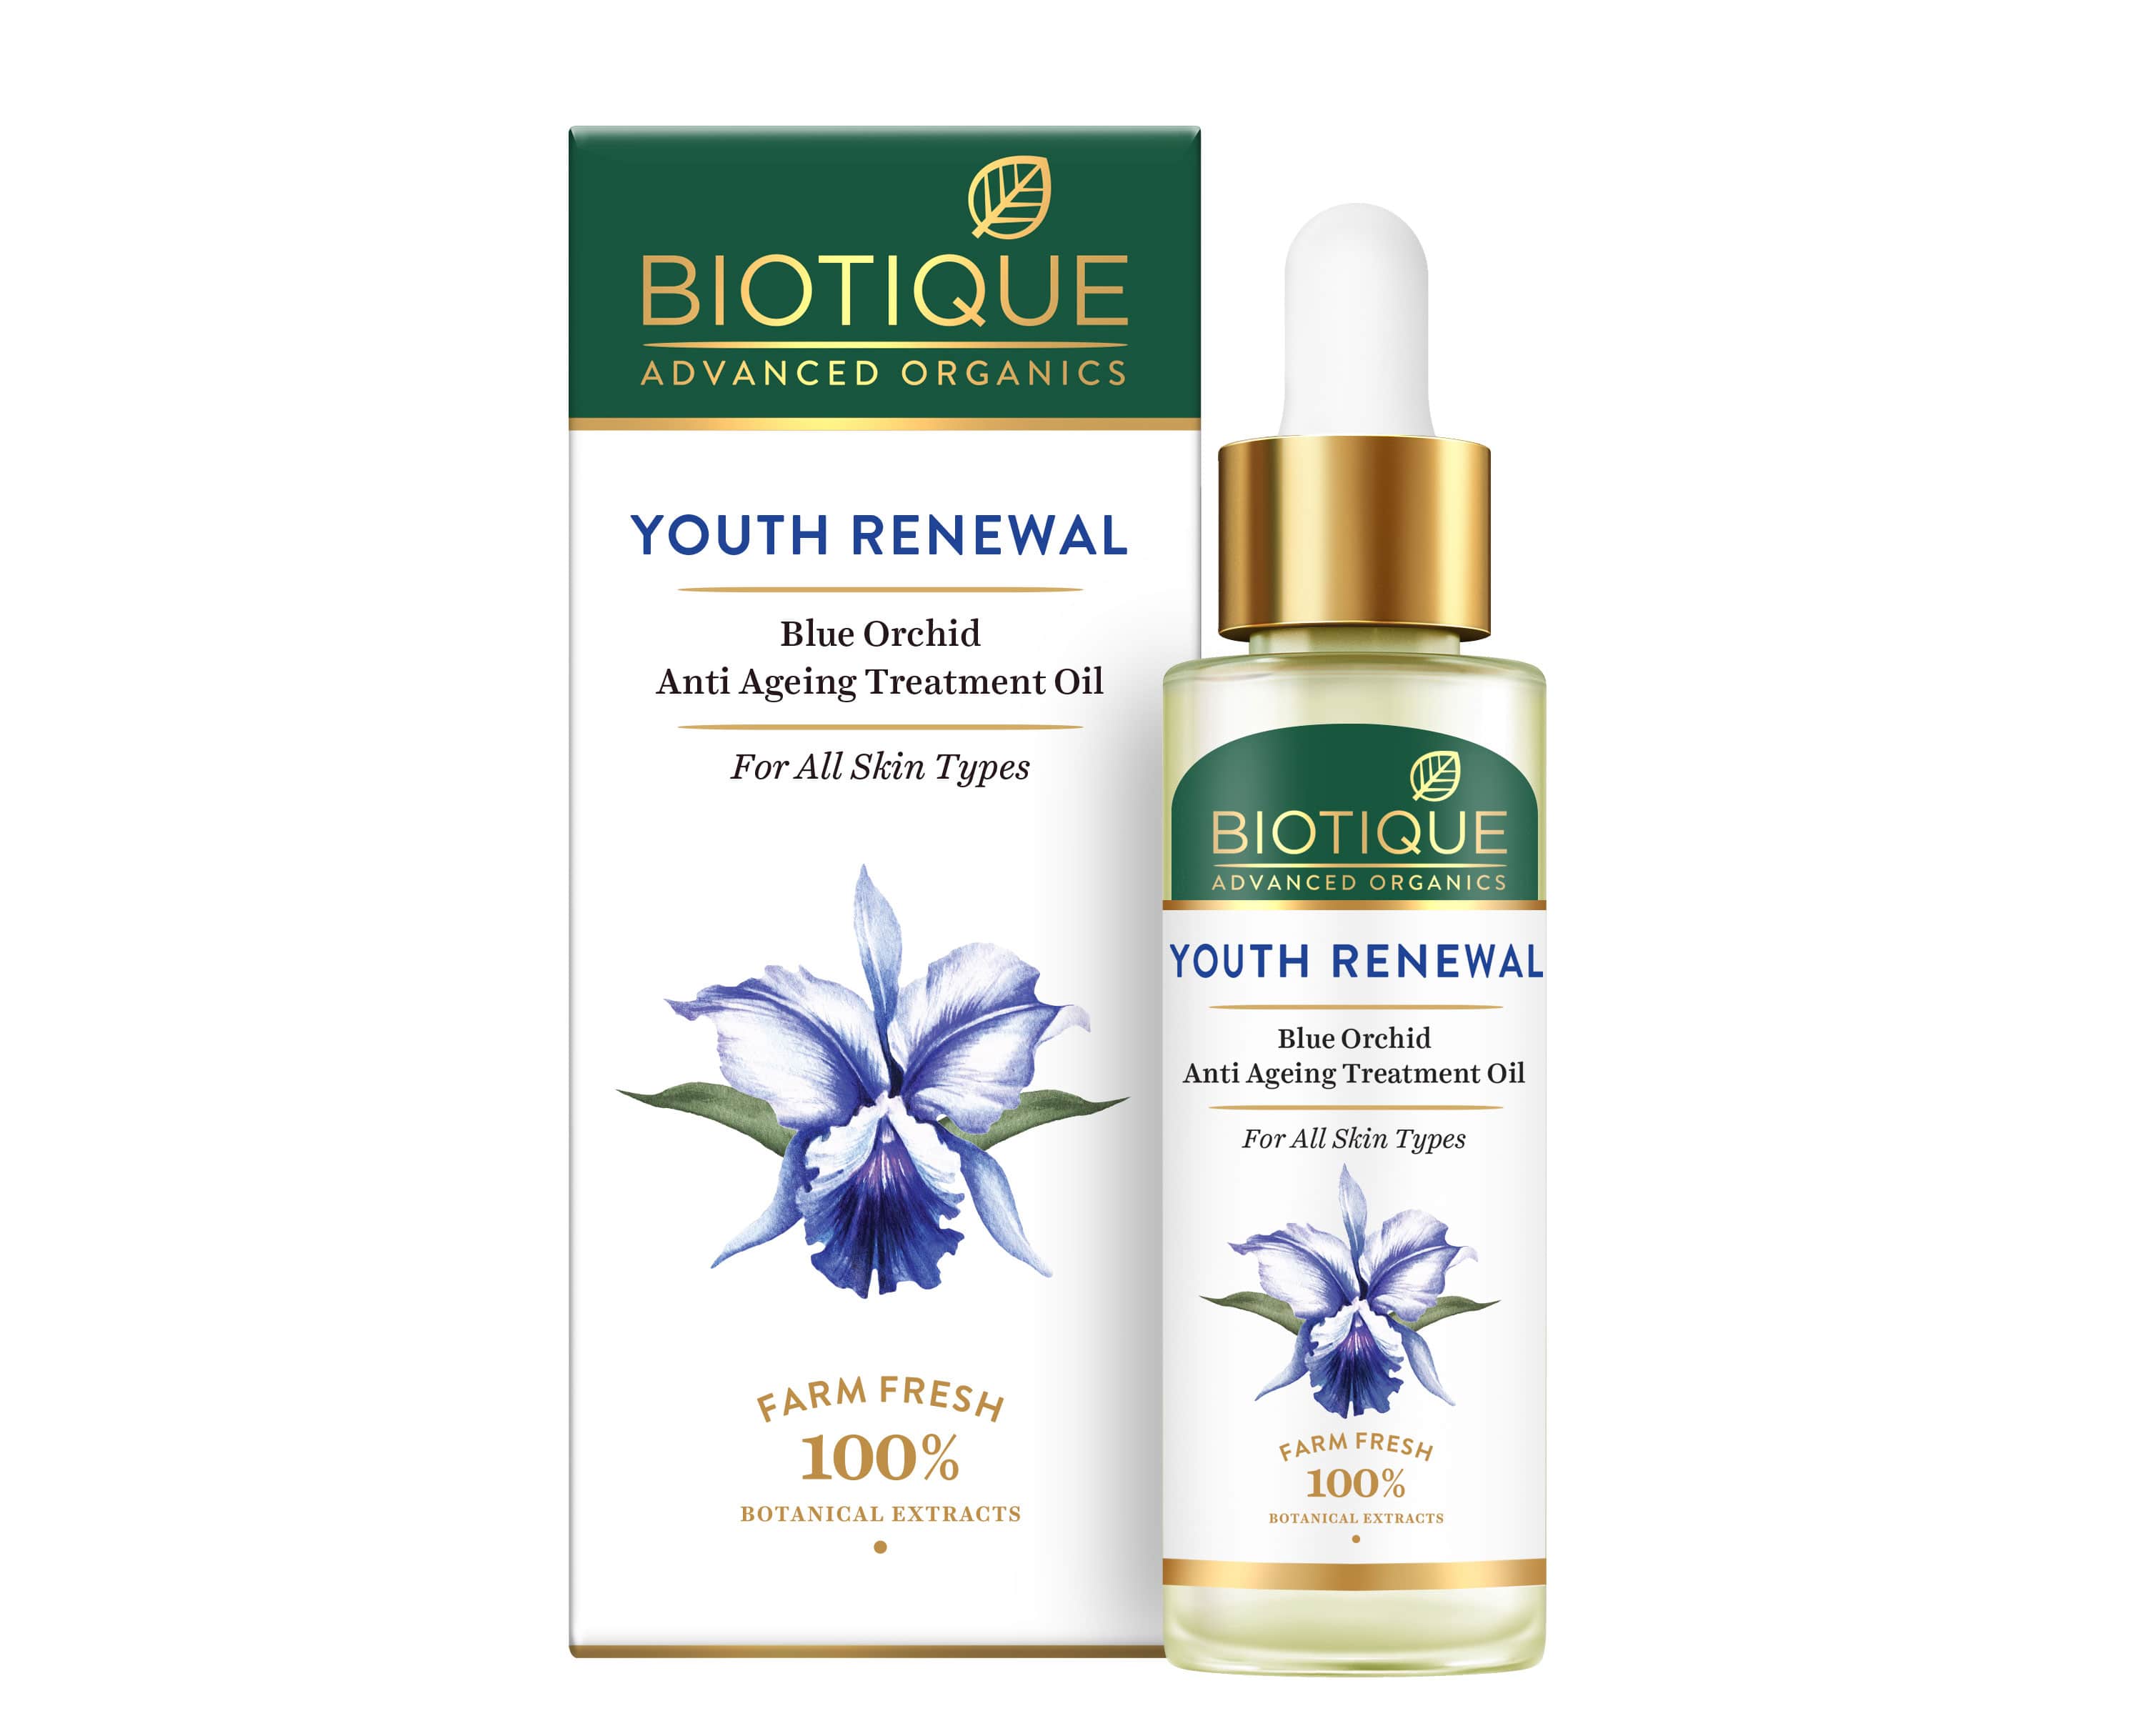 YOTH RENEWAL, Blue Orchid Anti-Ageing Treatment Oil, Biotique (Омолаживающее Антивозрастное МАСЛО ДЛЯ ЛИЦА с Голубой Орхидеей, Для всех типов кожи, Биотик), 30 мл.